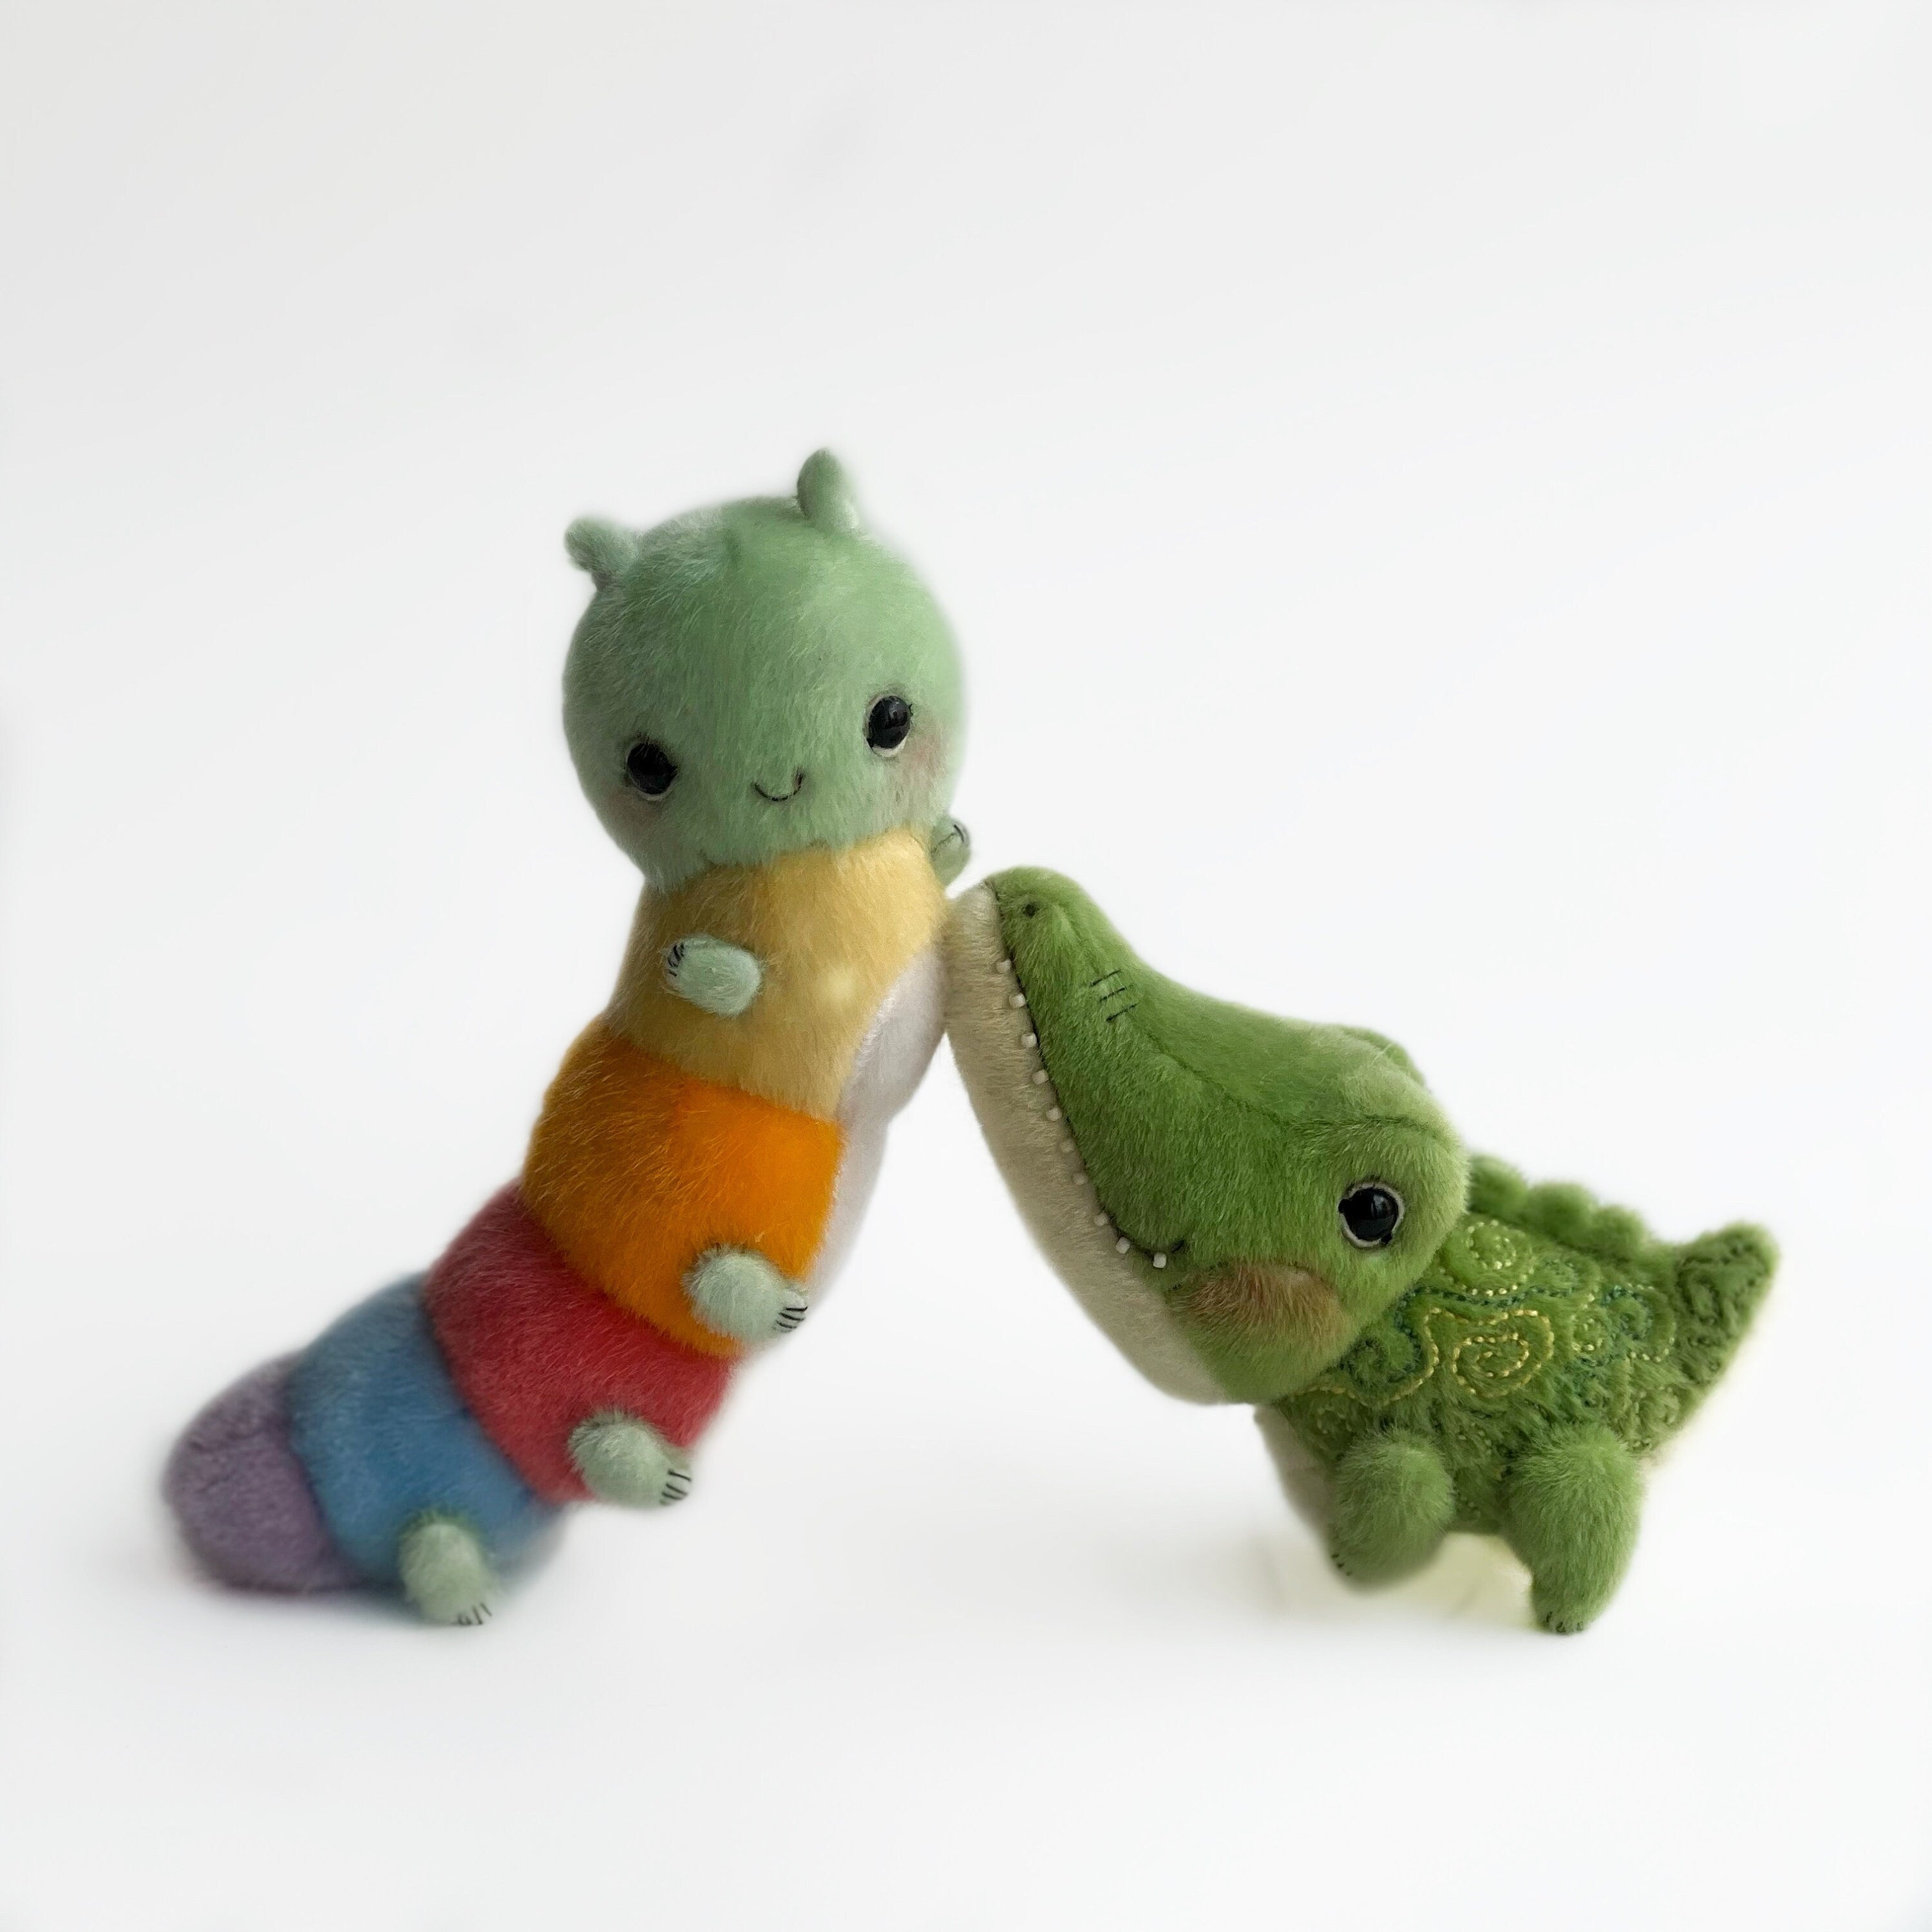 Crocodile - PDF sewing pattern, artist pattern, stuffed toy tutorials, alligator soft toy diy craft kit for adults gift by TSminibears